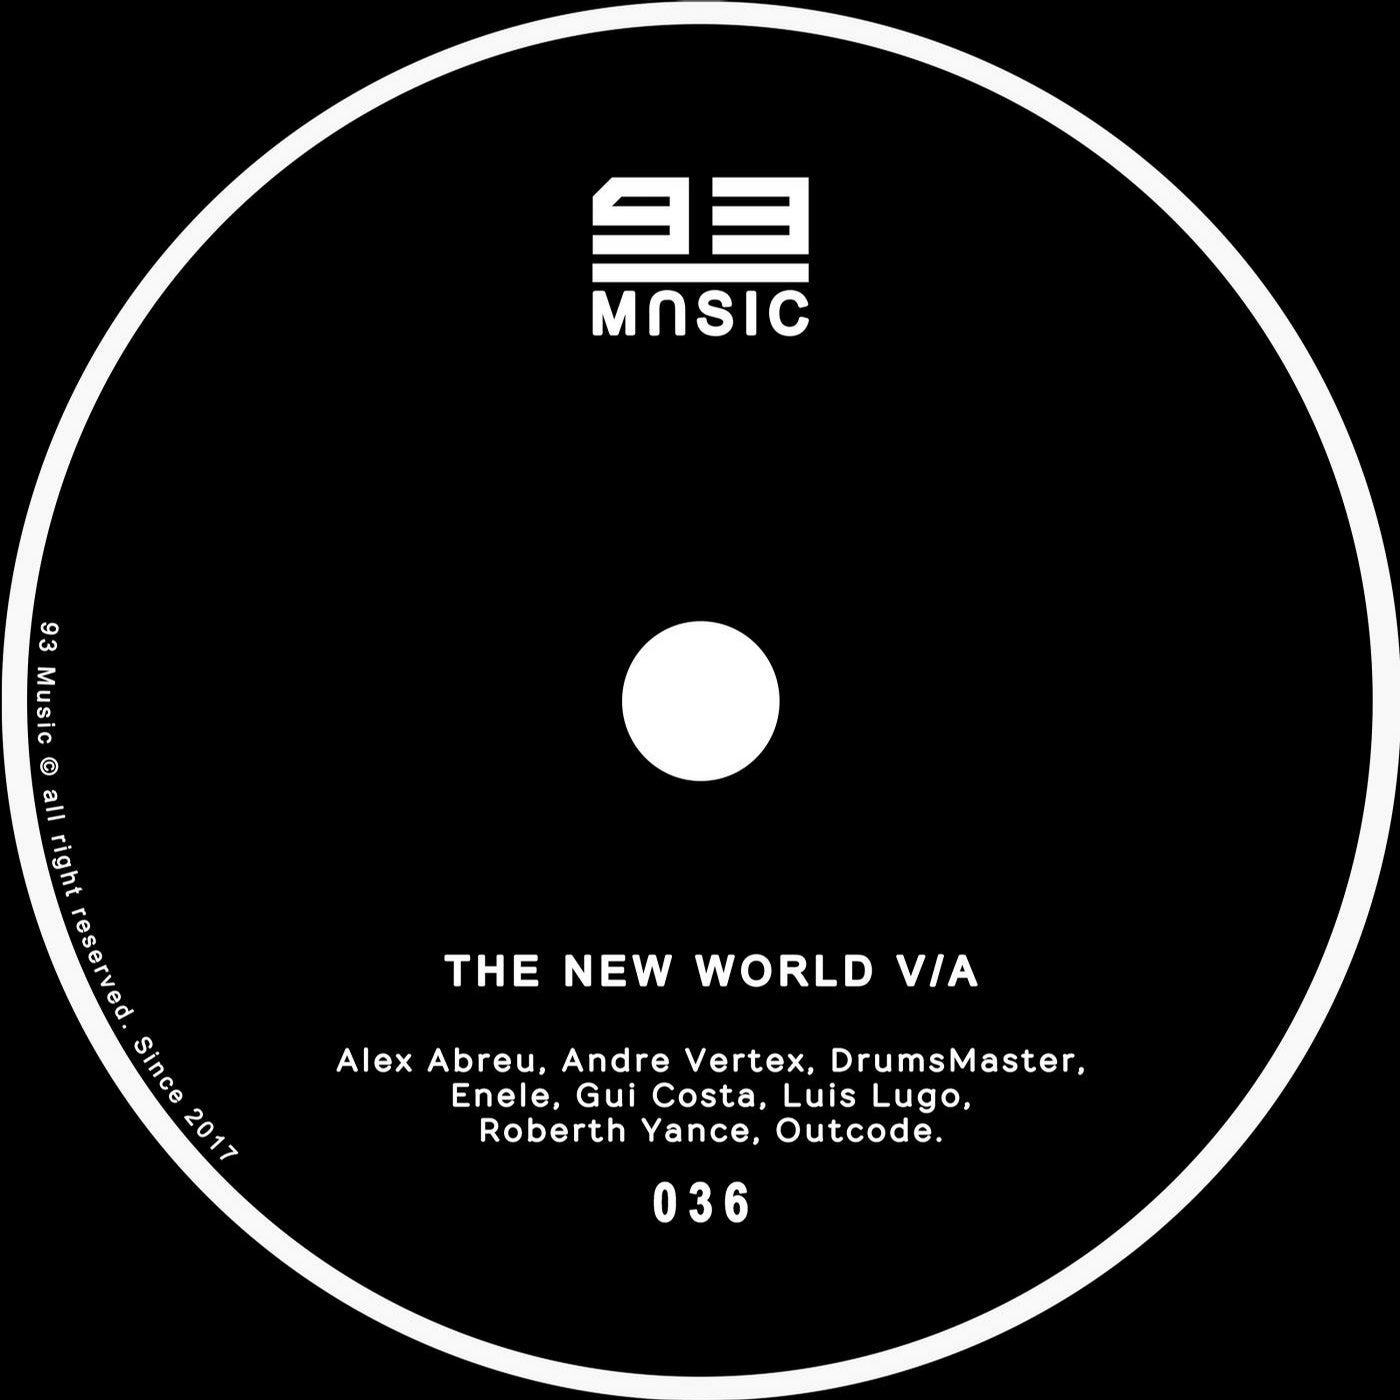 The New World V/A